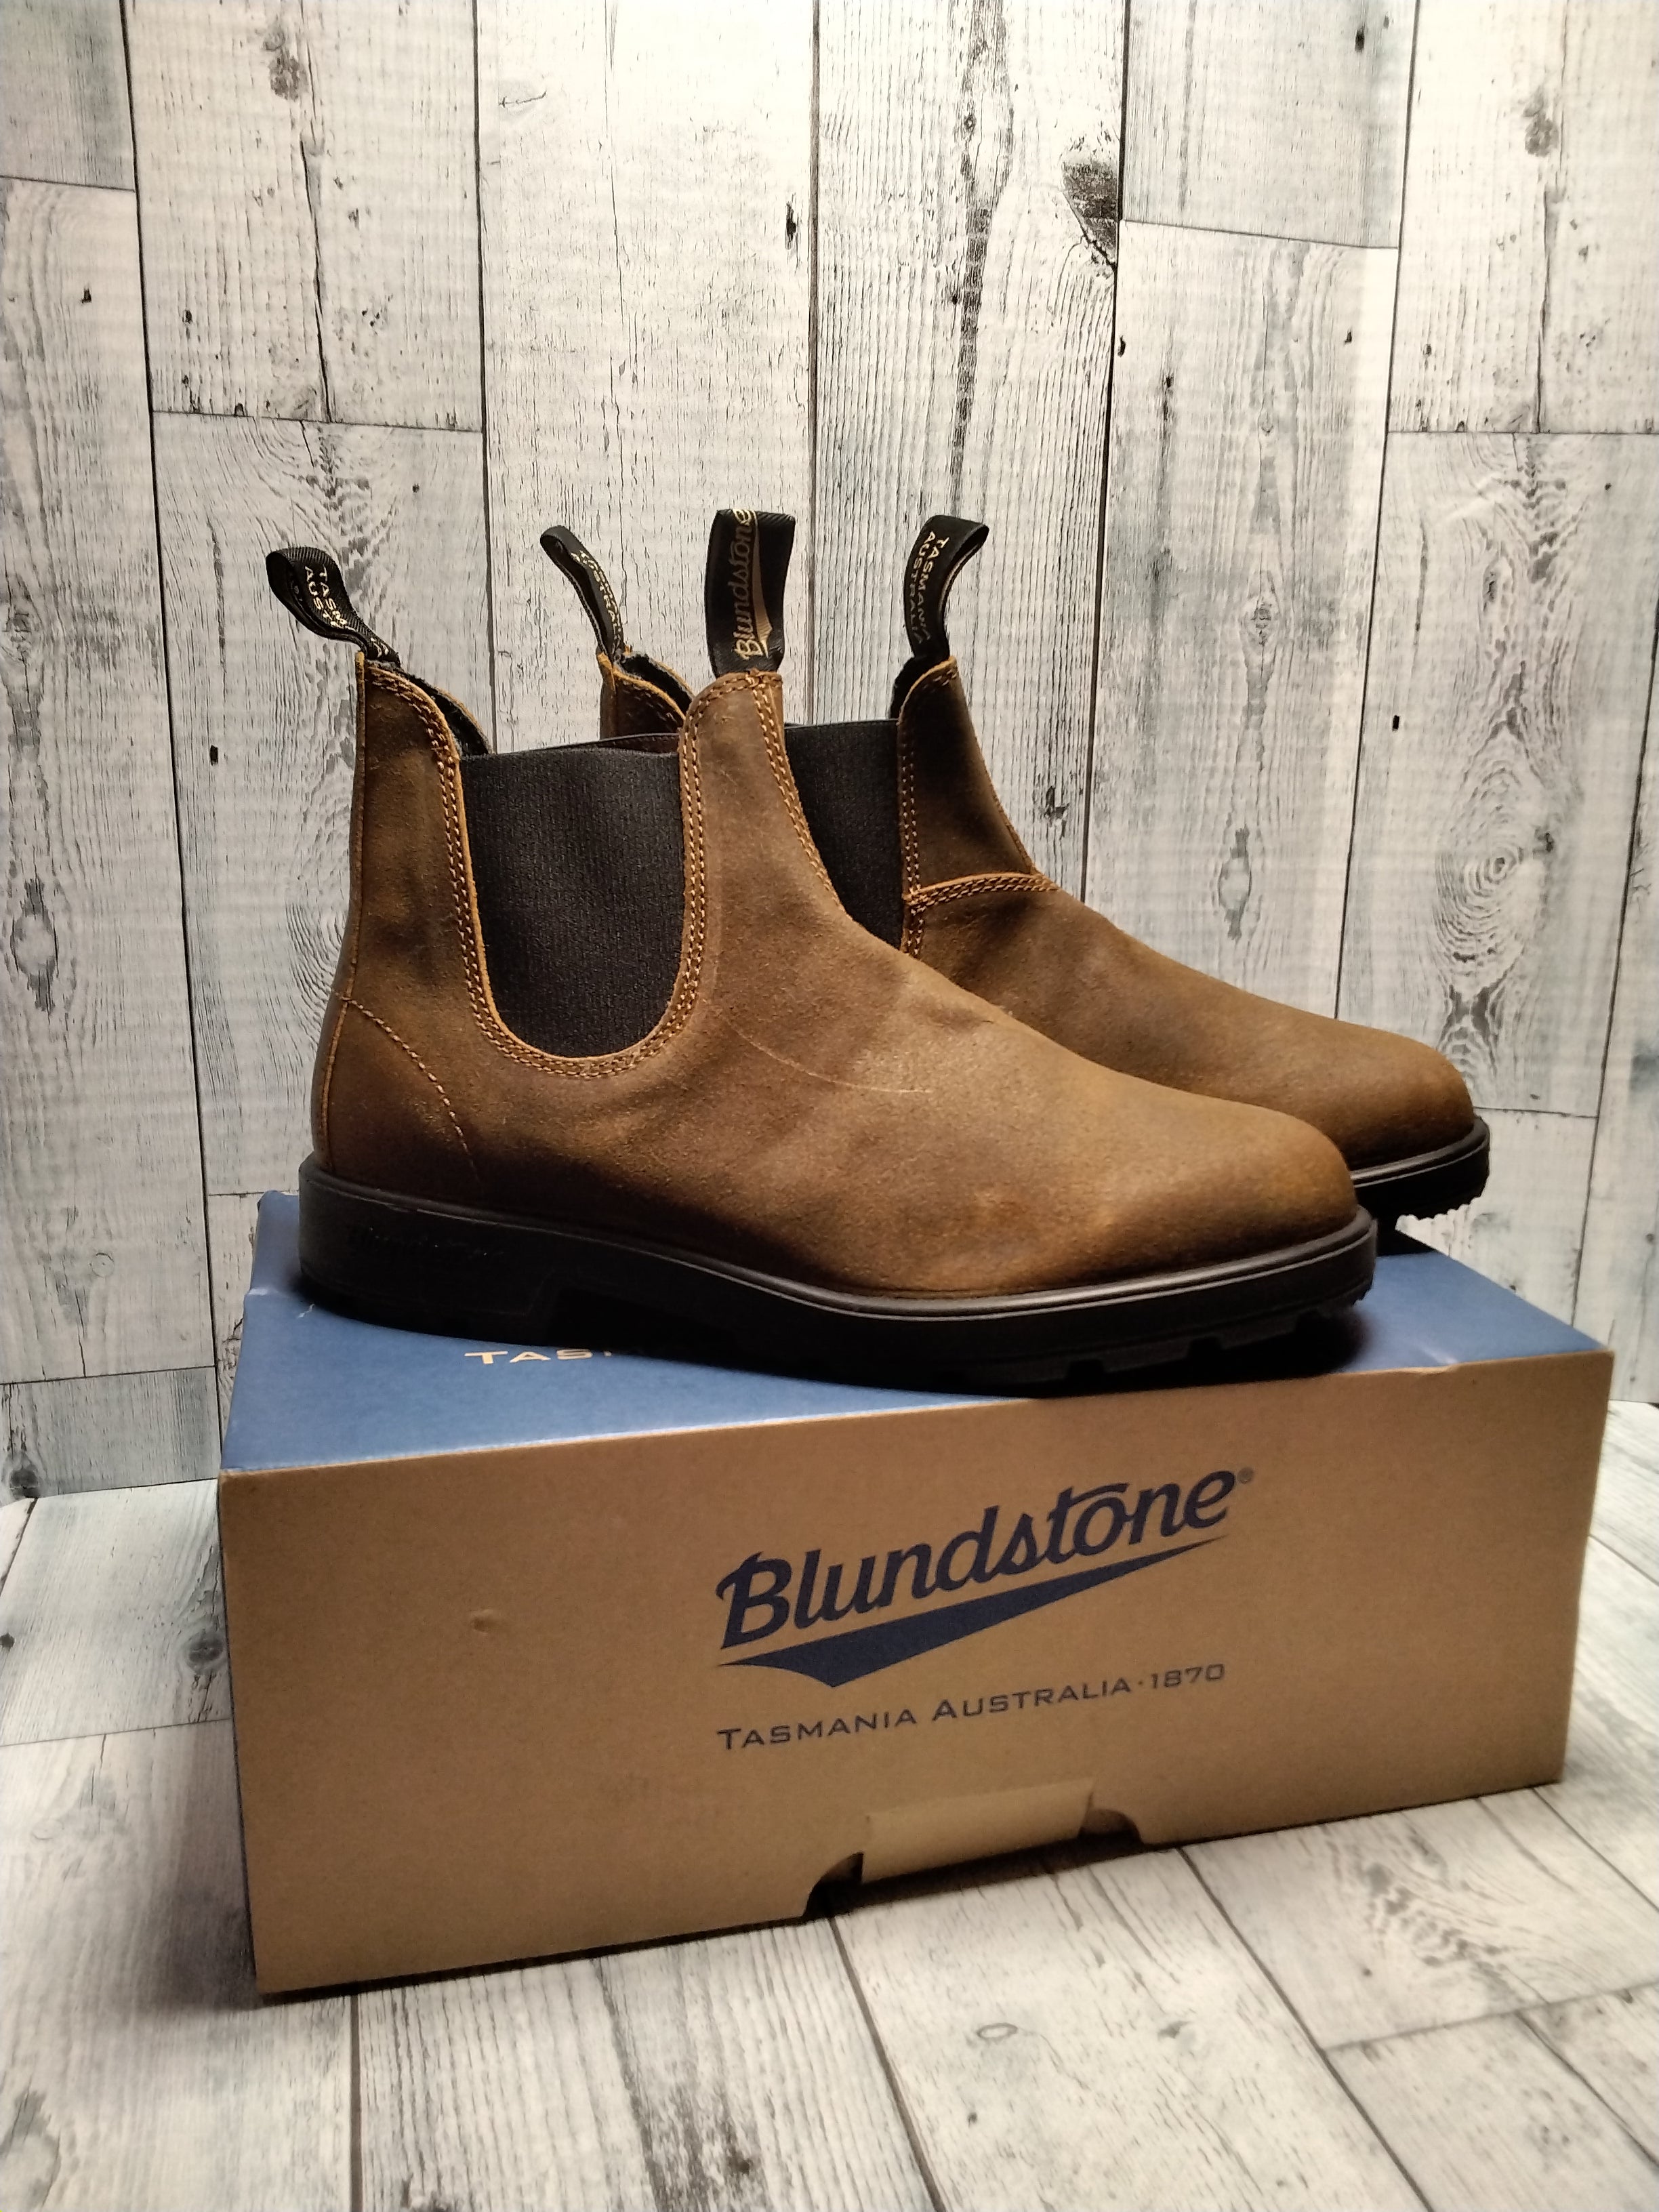 Blundstone BL1911 Chelsea Boot, Tobacco, Sz 8.5 Mens (7754557718766)